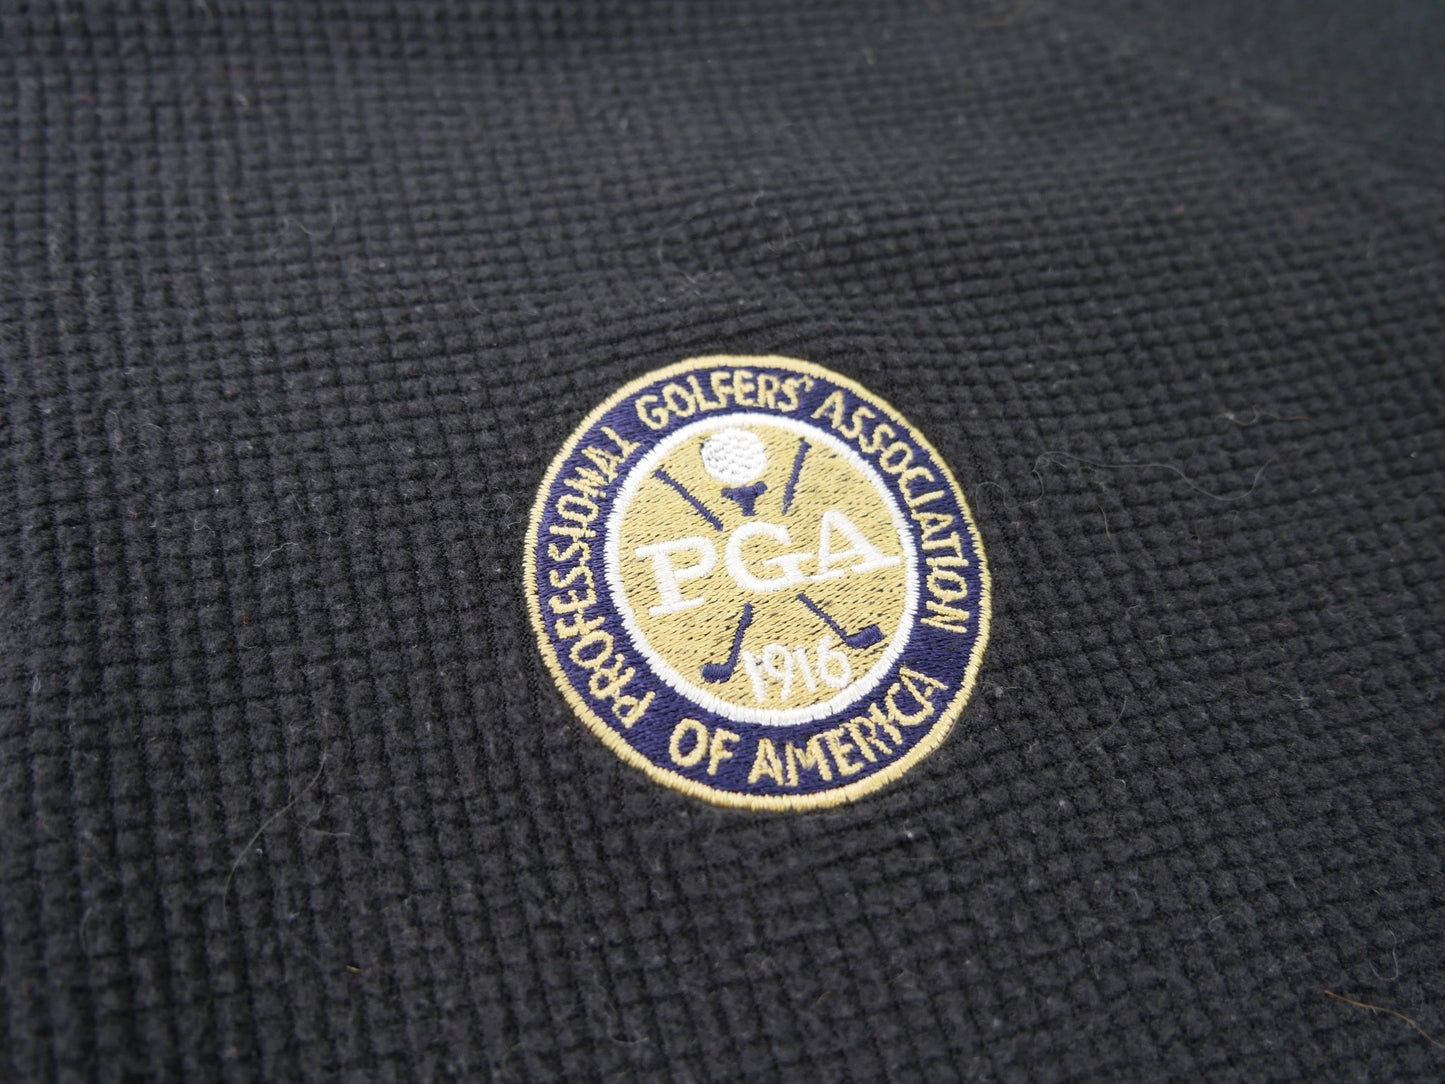 Adidas 'PGA' embroidered Logo Zip Sweater - Peeces